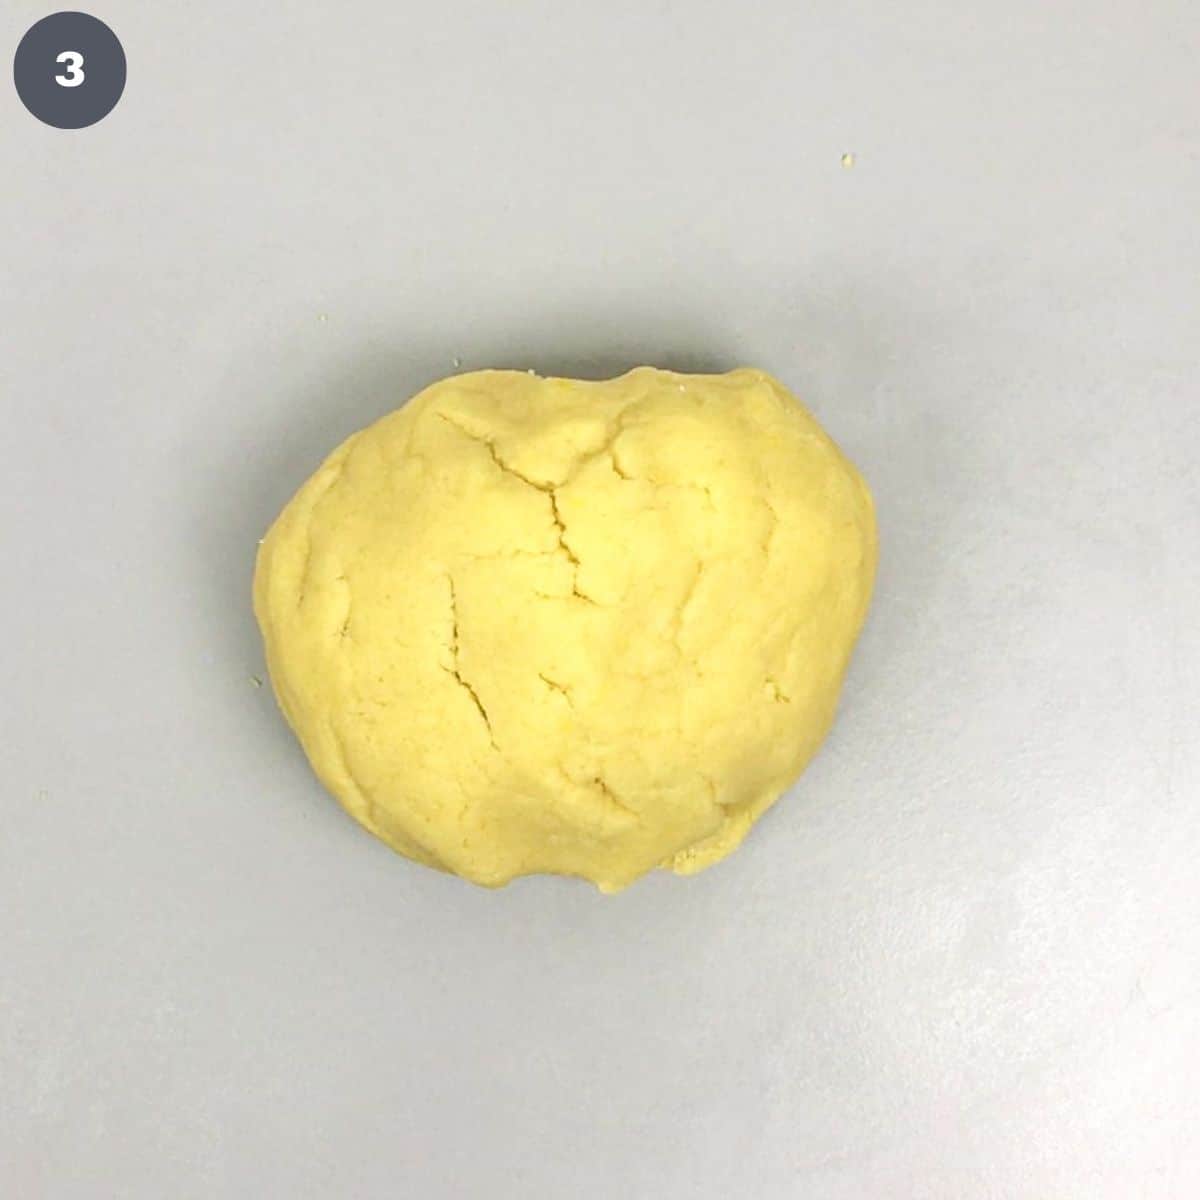 A ball of cookie dough.